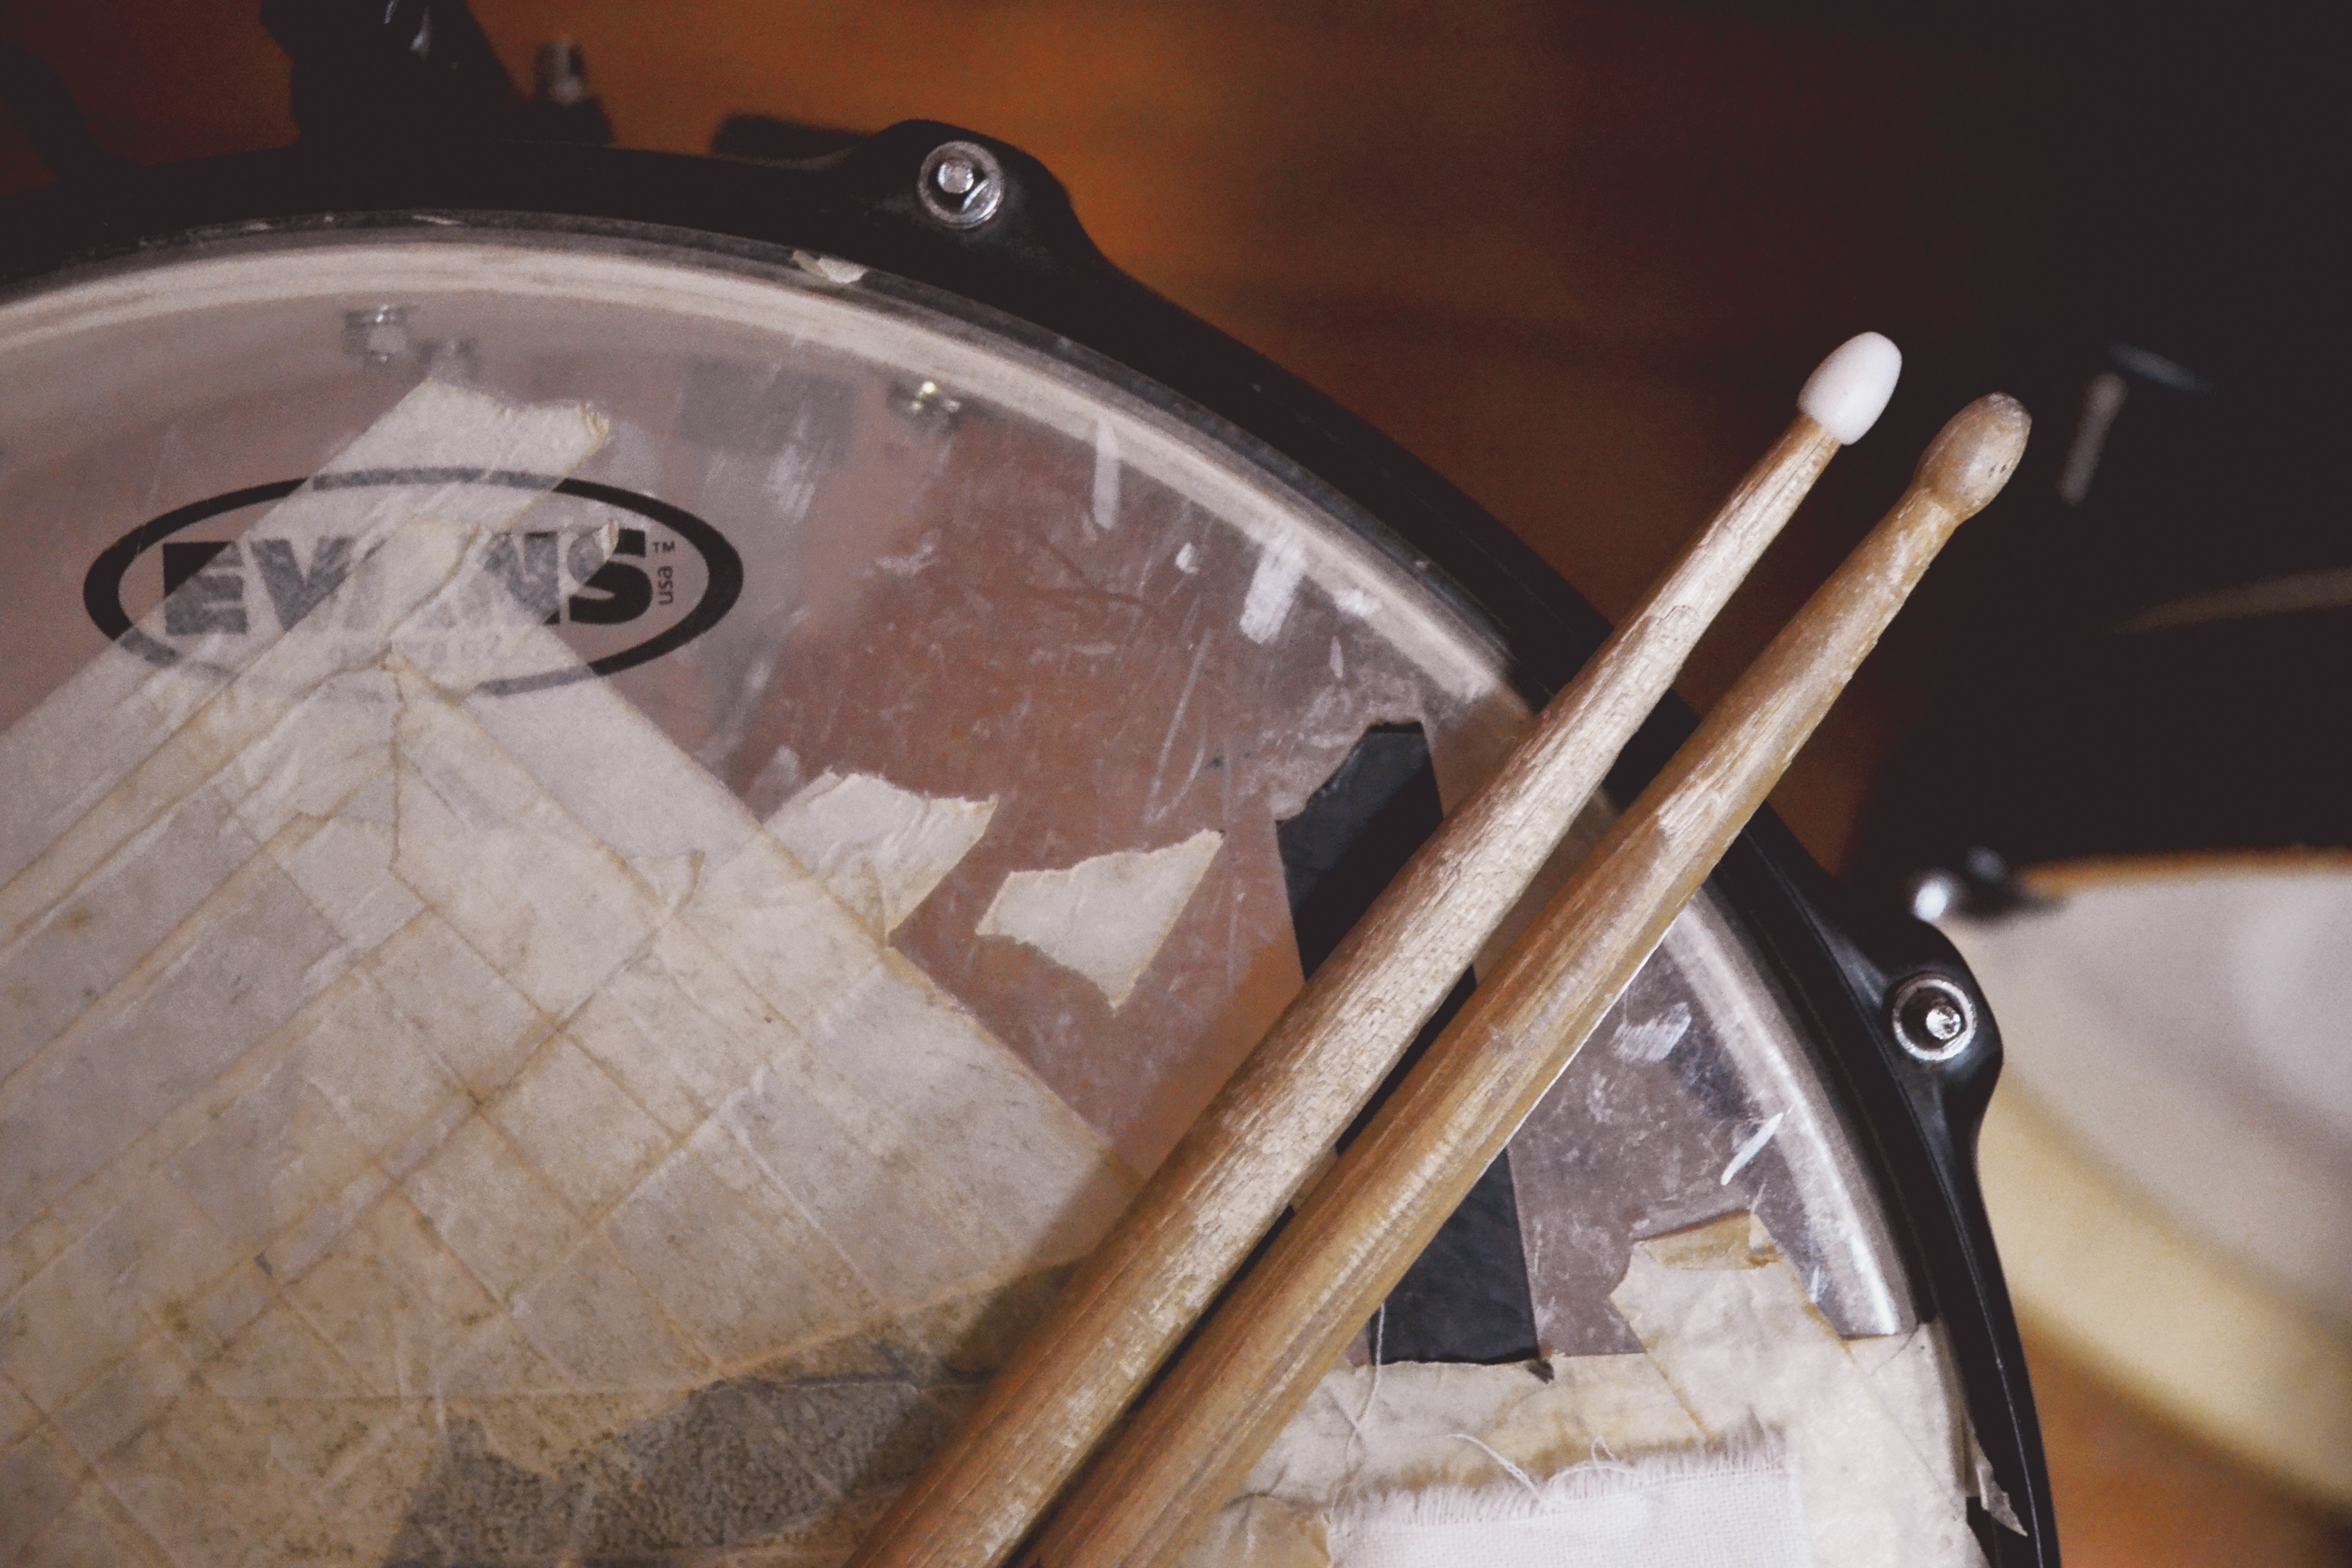 online drum lessons